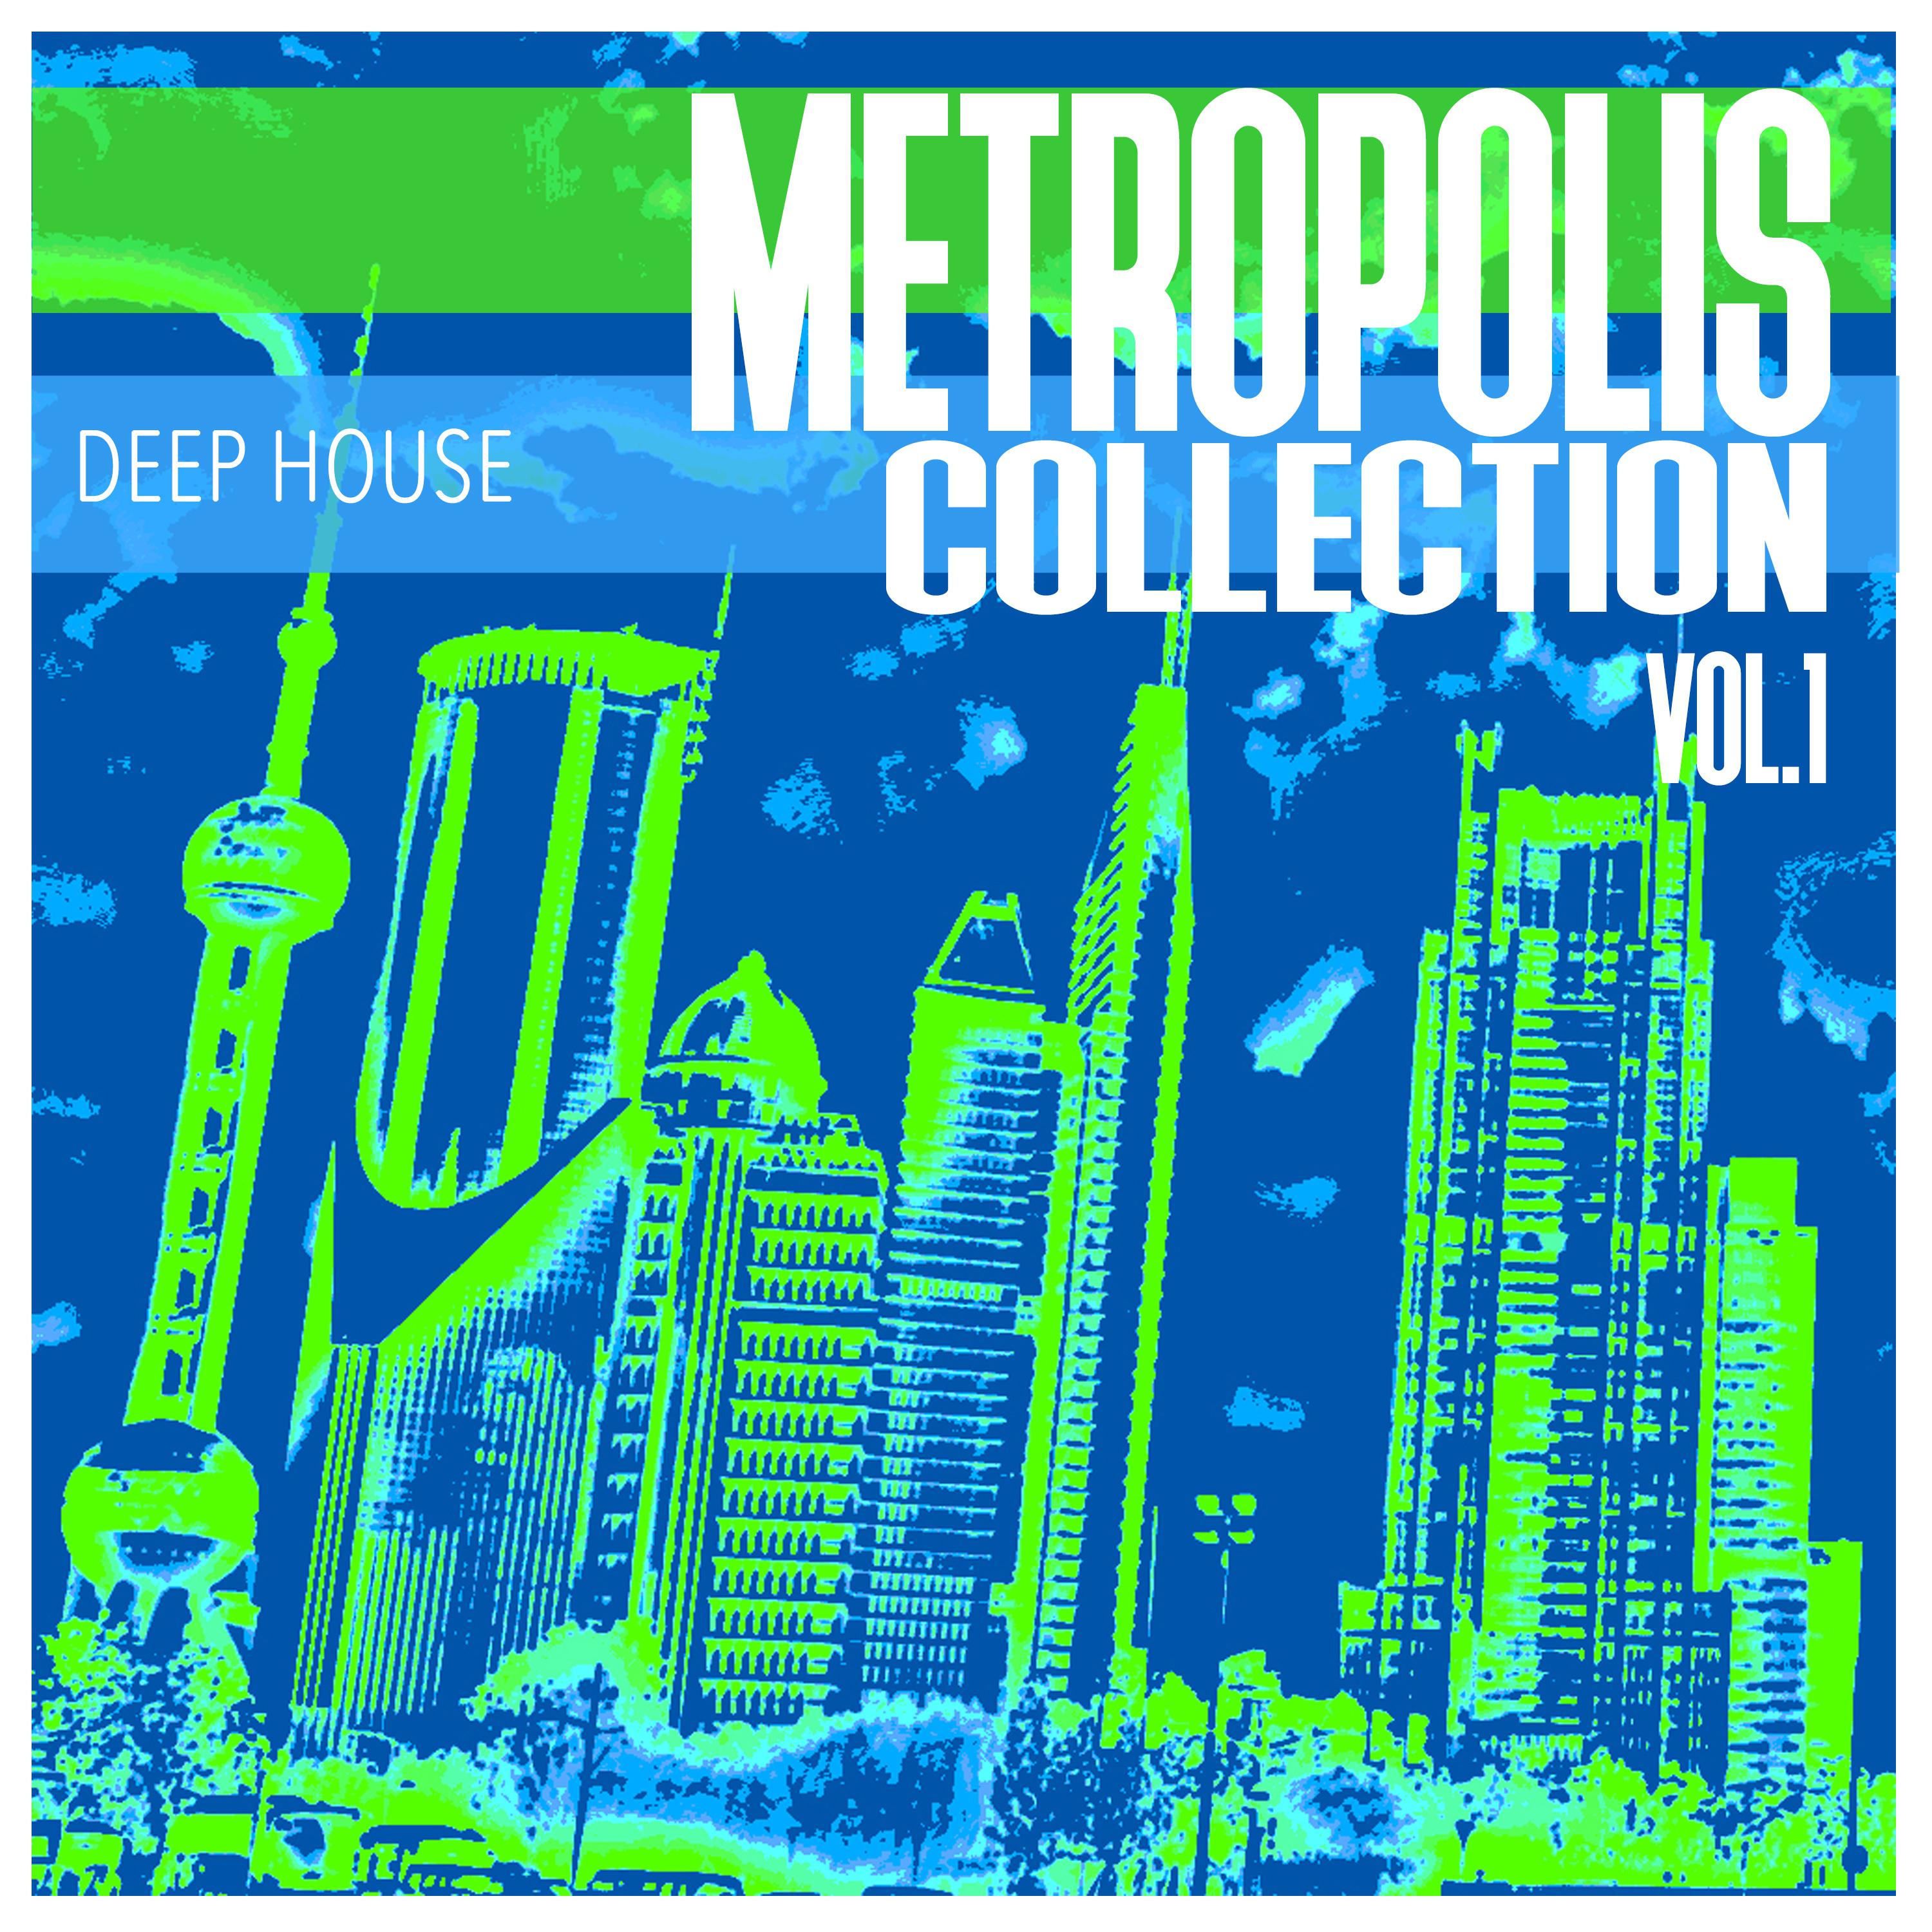 Metropolis Collection, Vol. 1 - Selection of Deep House